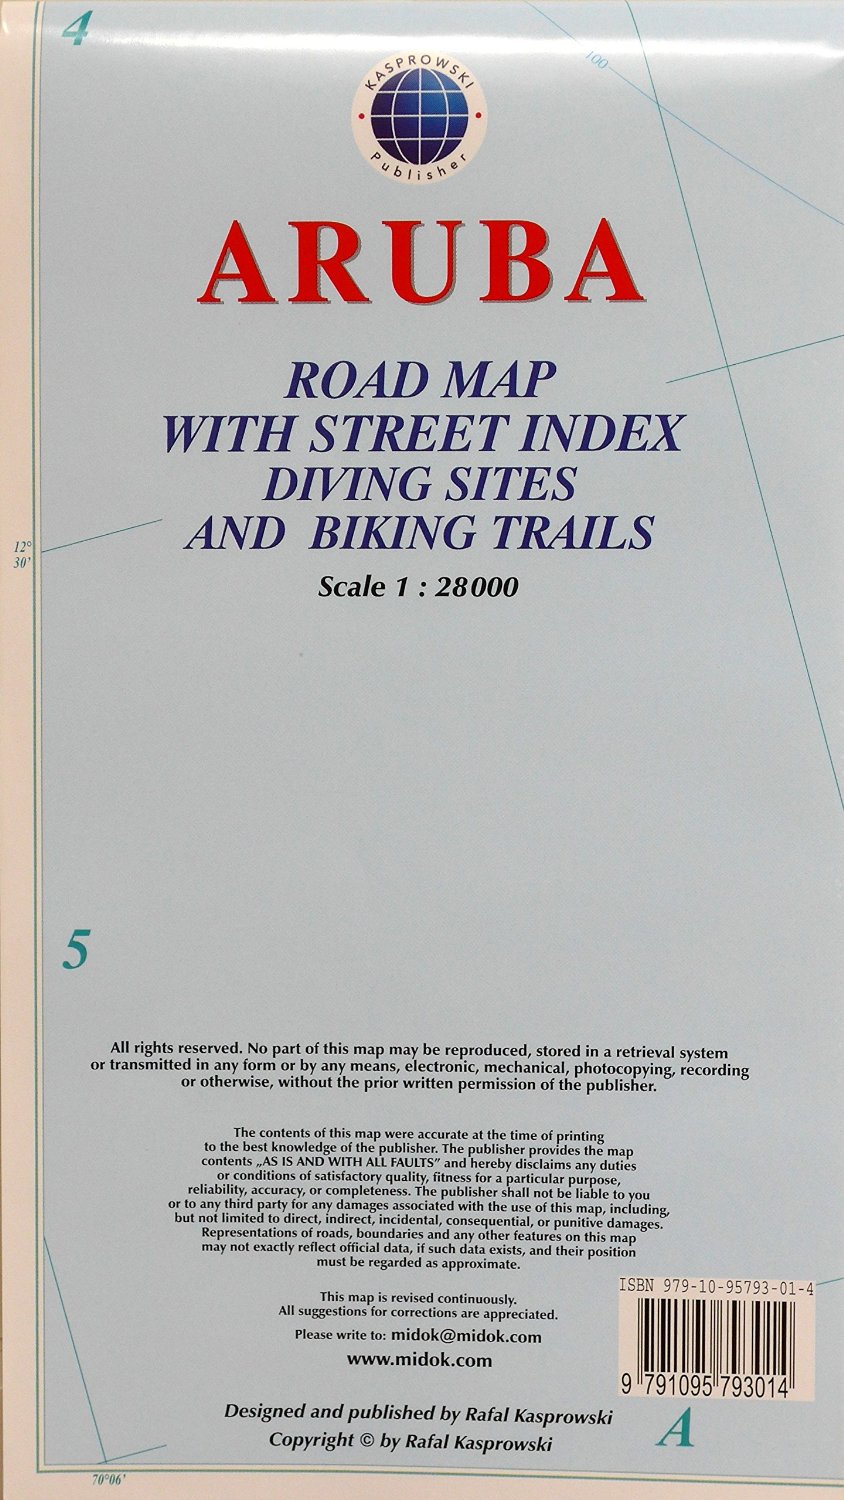 Aruba Road Map - Kasprowski Publisher